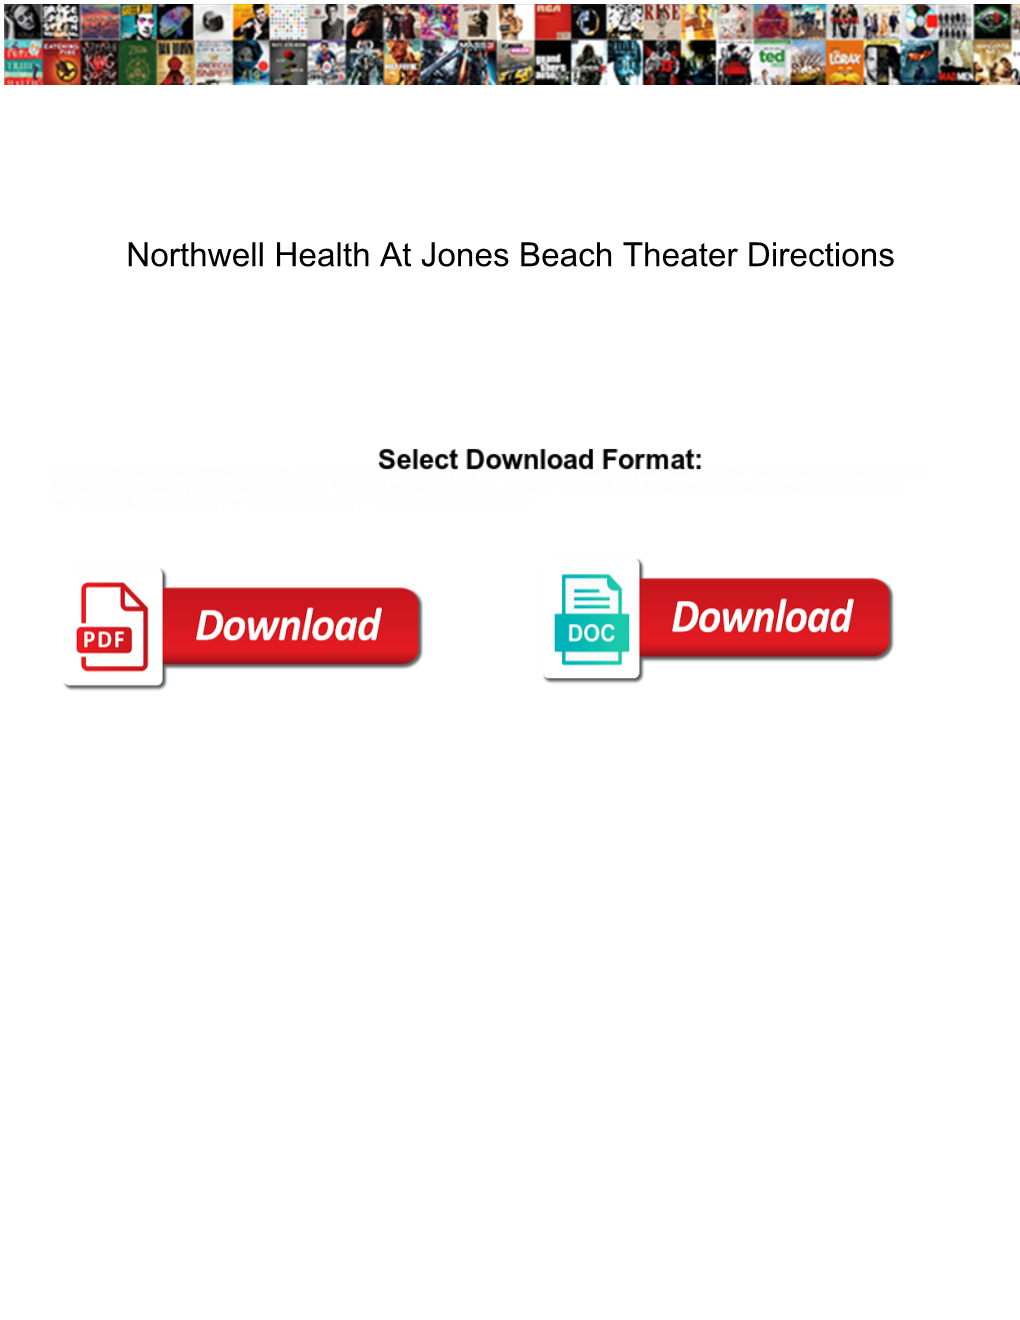 Northwell Health at Jones Beach Theater Directions